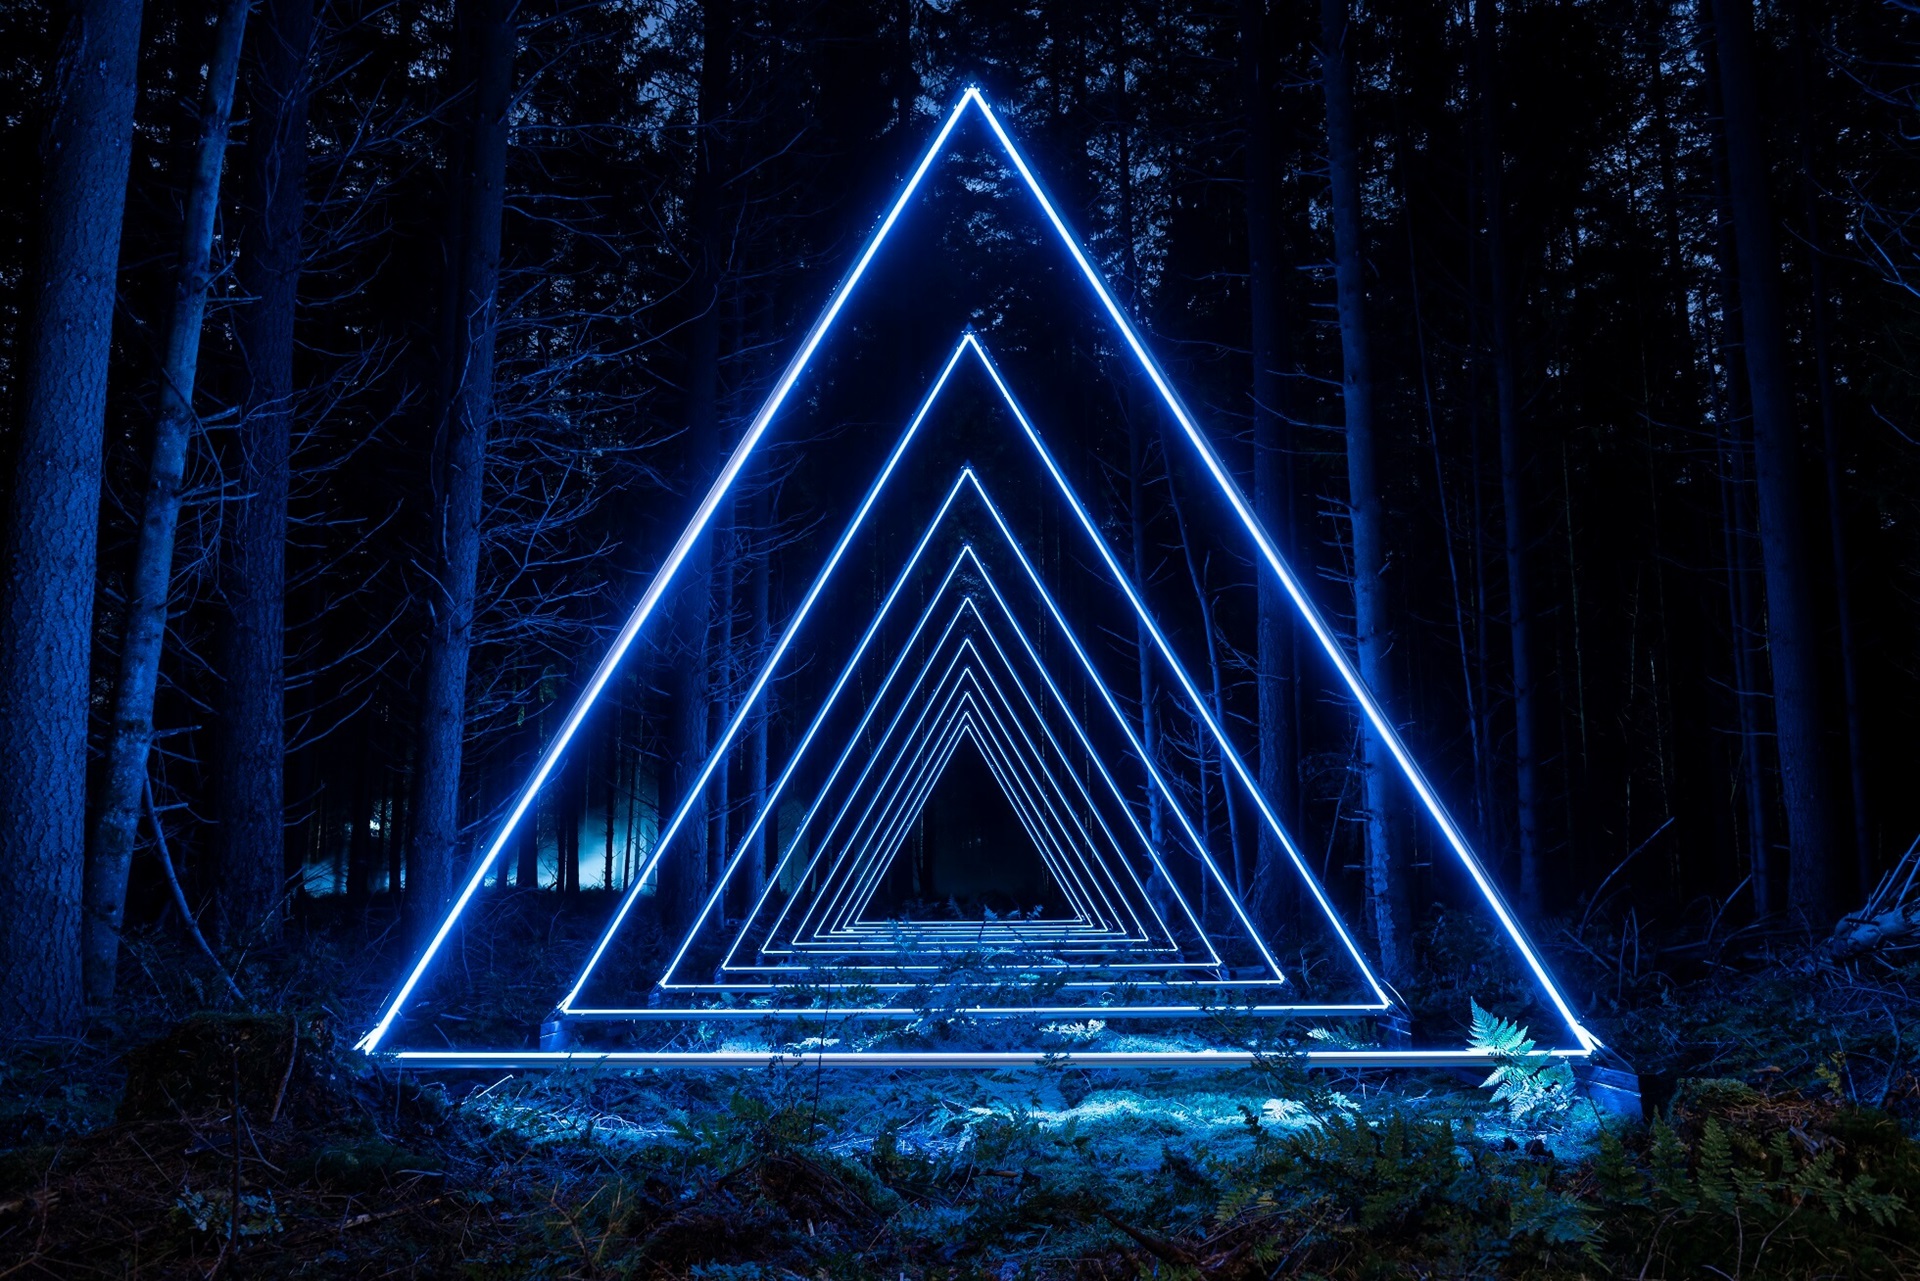 Blue, triangular and brightly lit lights in a dark forest